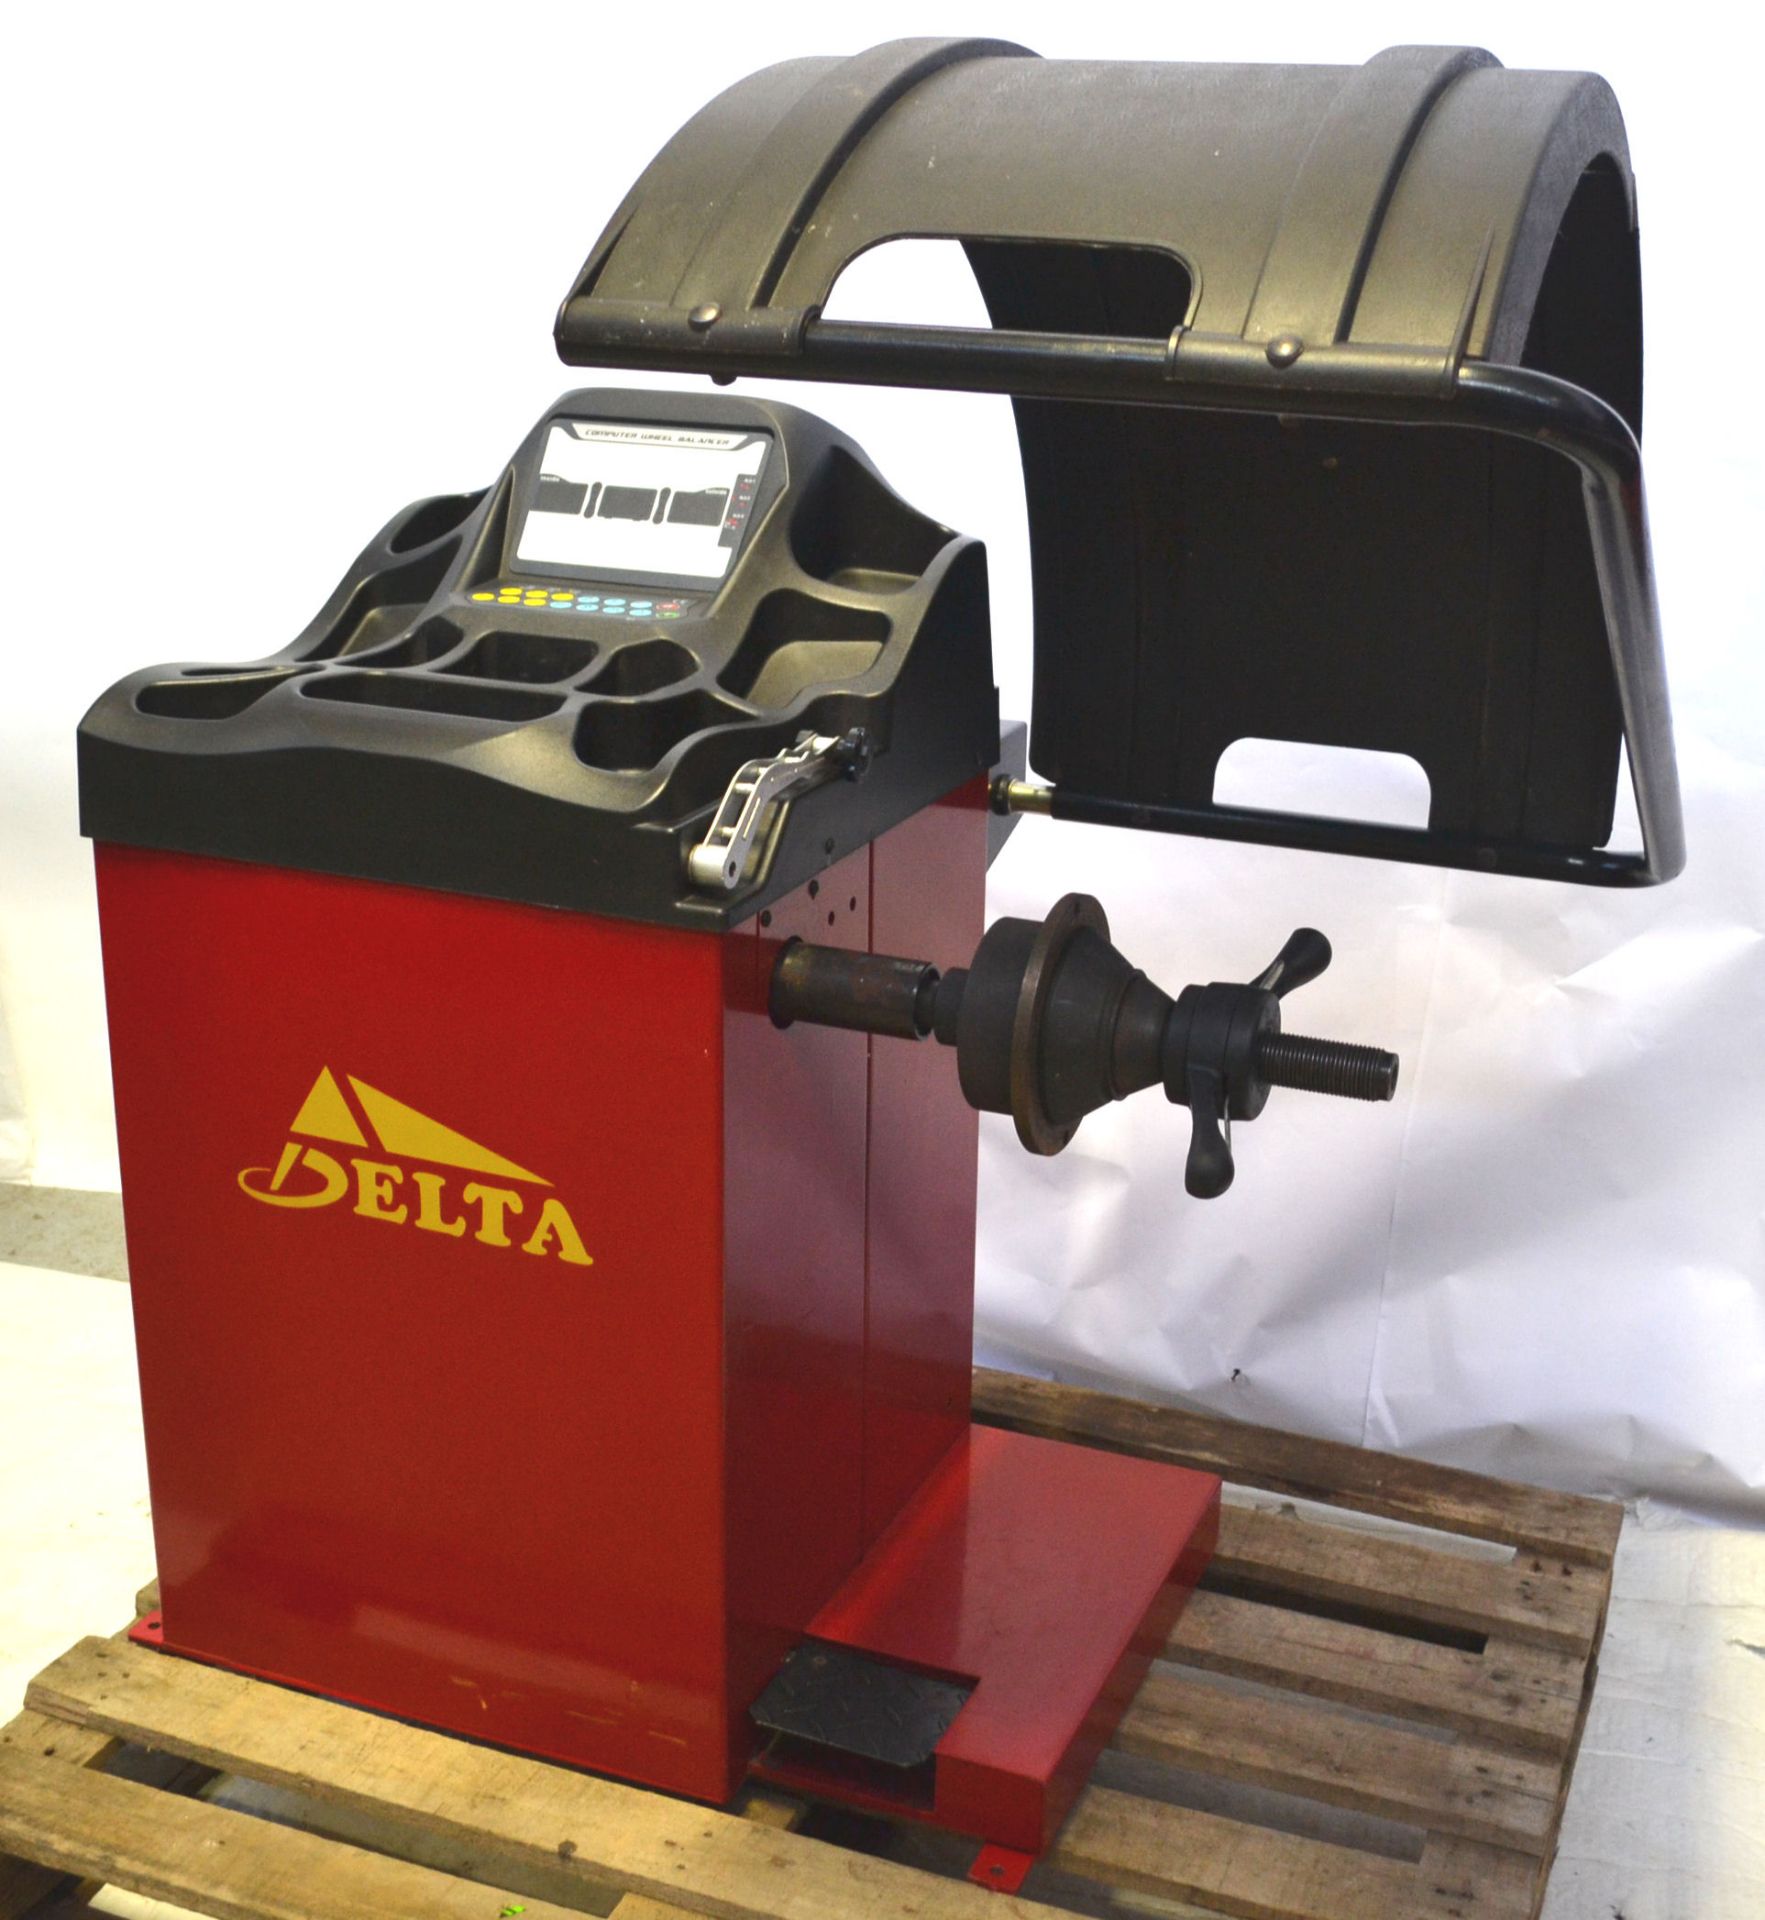 1 x Delta Workshop Wheel Balancer - Model SBM95AP - Excellent Condition - CL007 - Location: